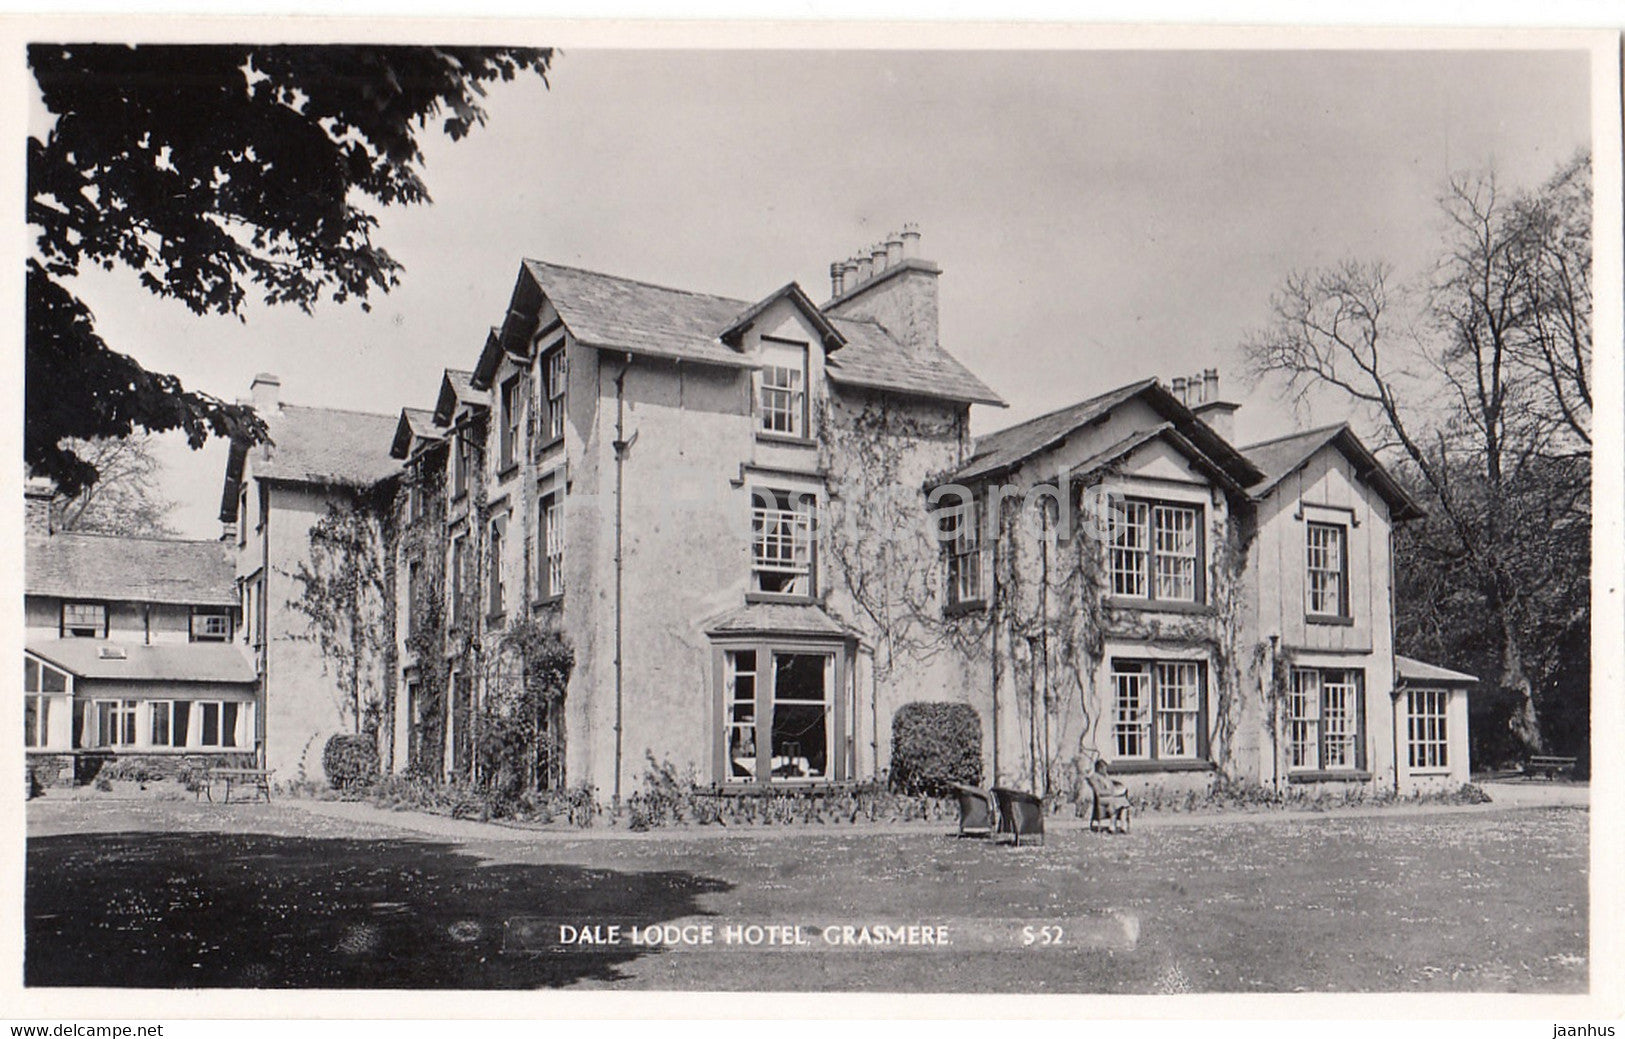 Grasmere - The Dale Lodge Hotel - S 52 - old postcard - England - United Kingdom - unused - JH Postcards